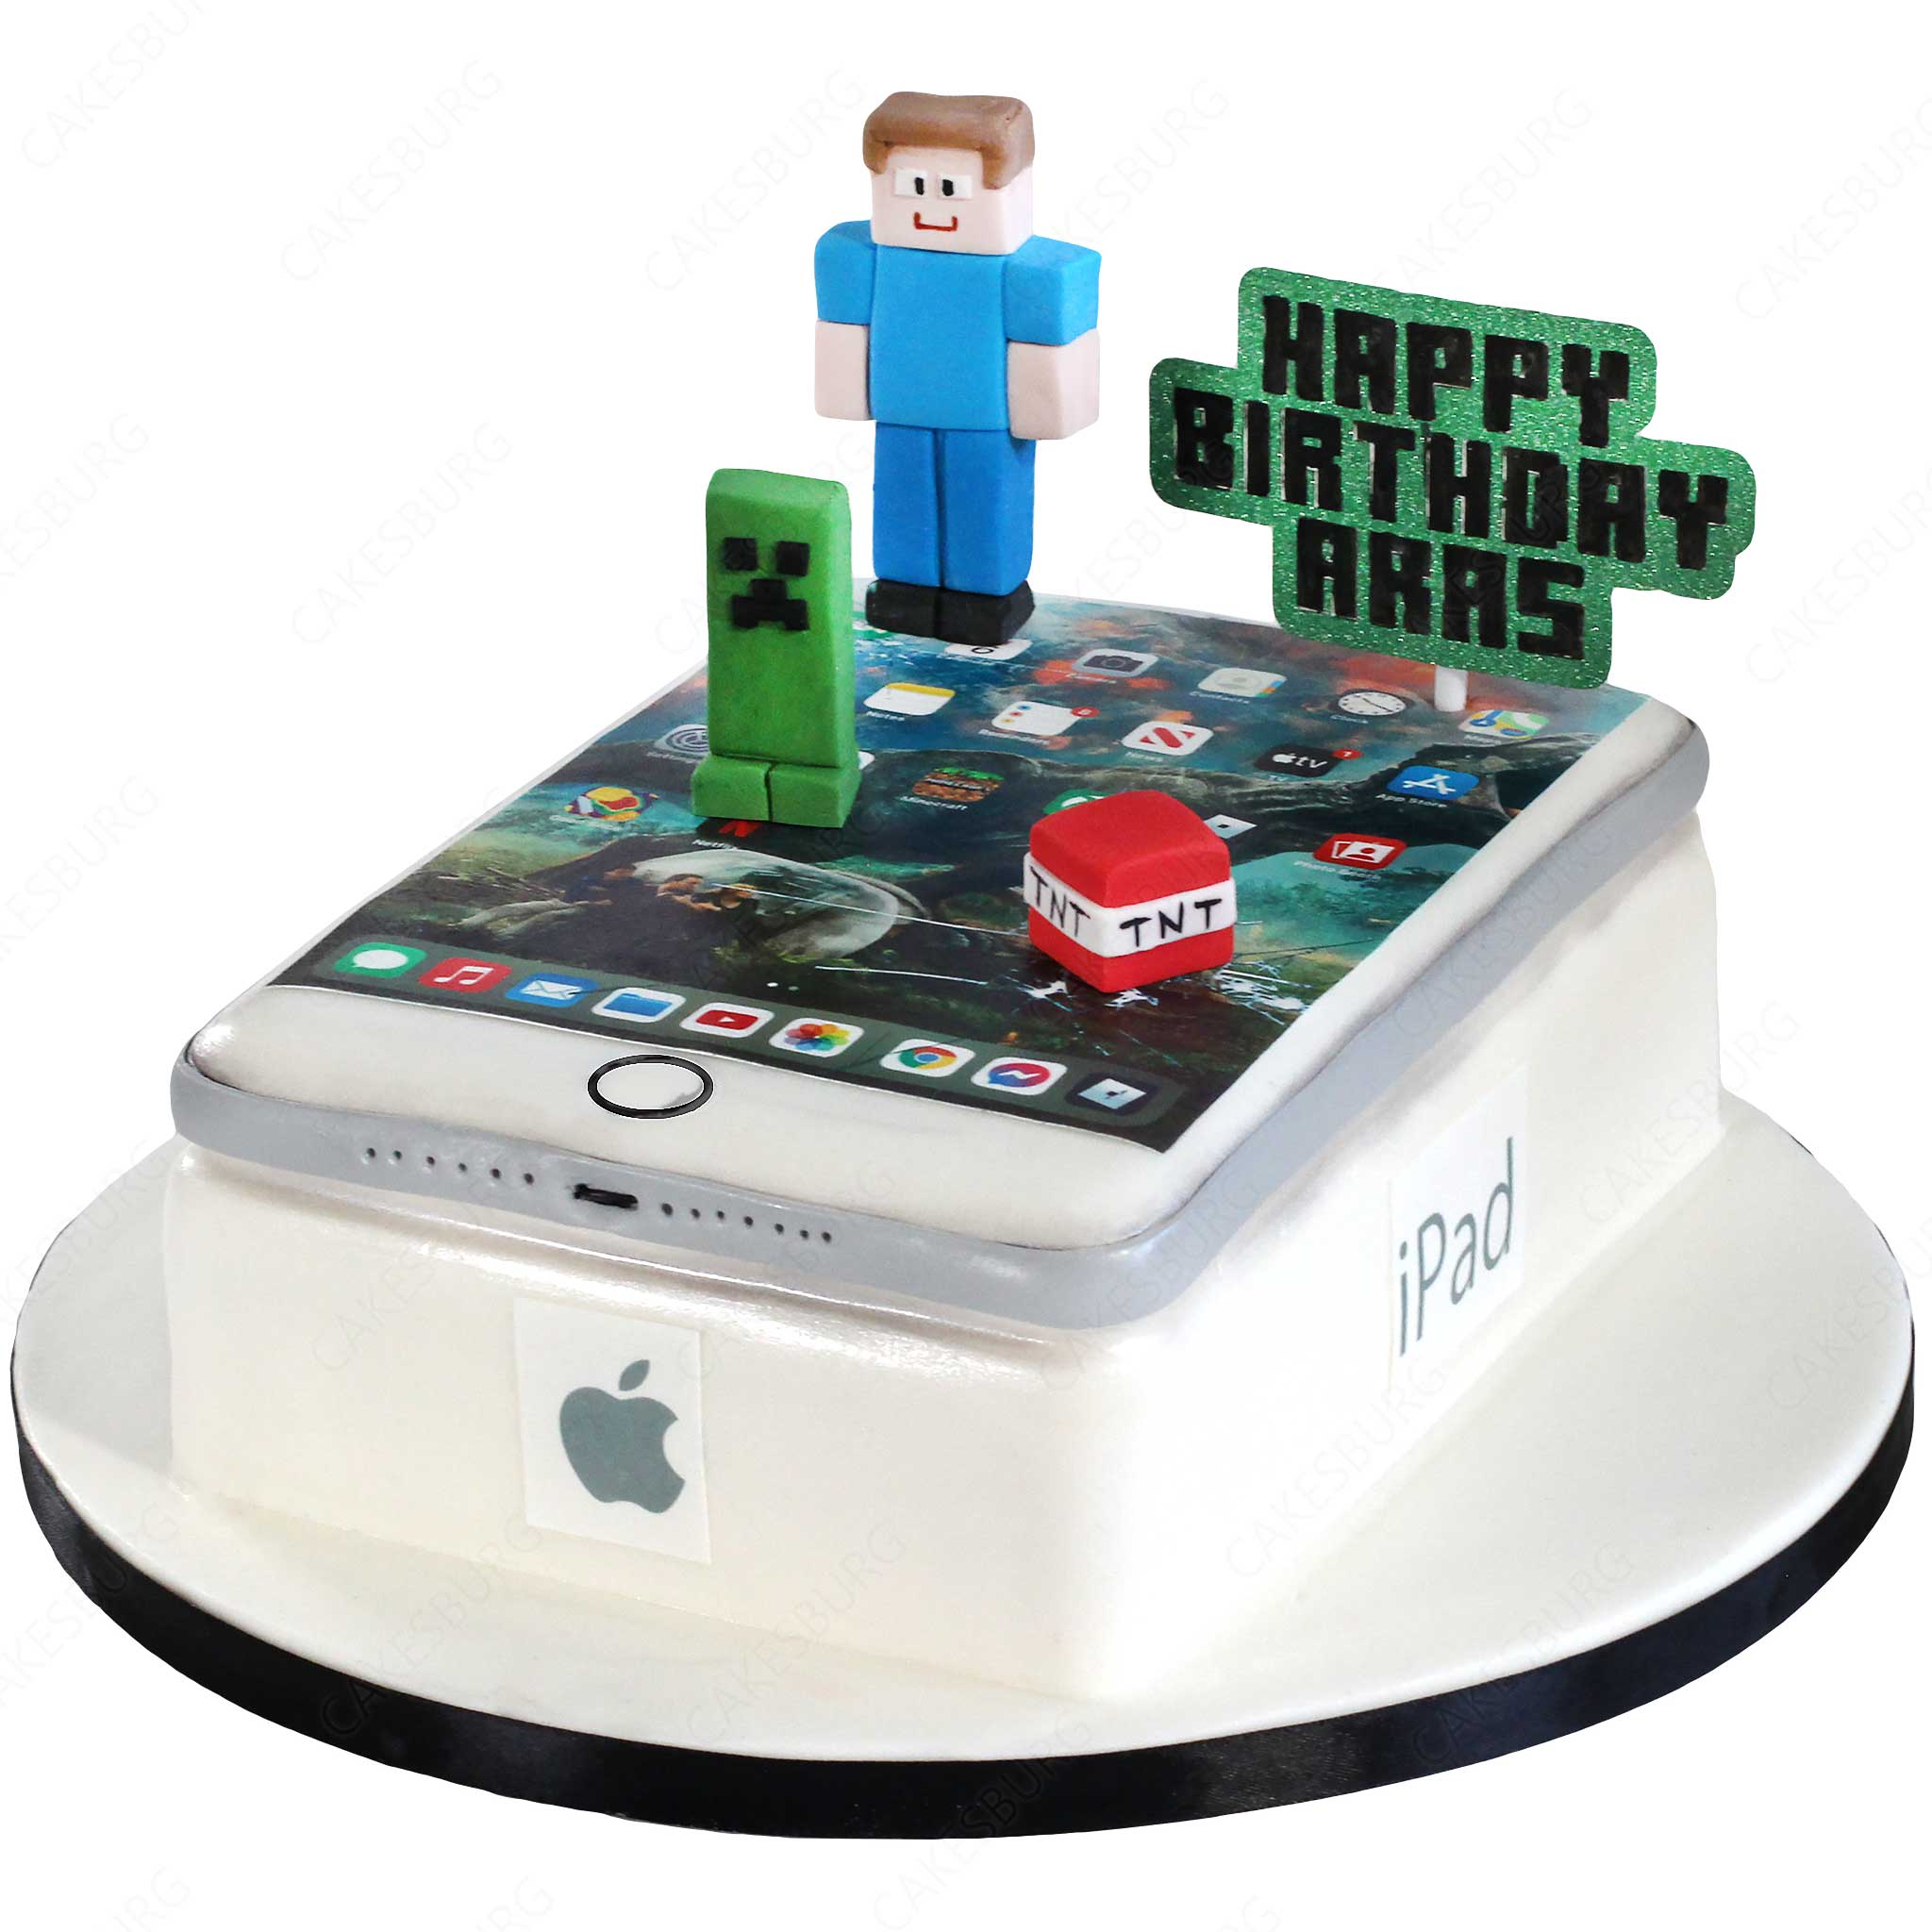 Apple birthday cake ! | Apple birthday, Apple products, Themed cakes